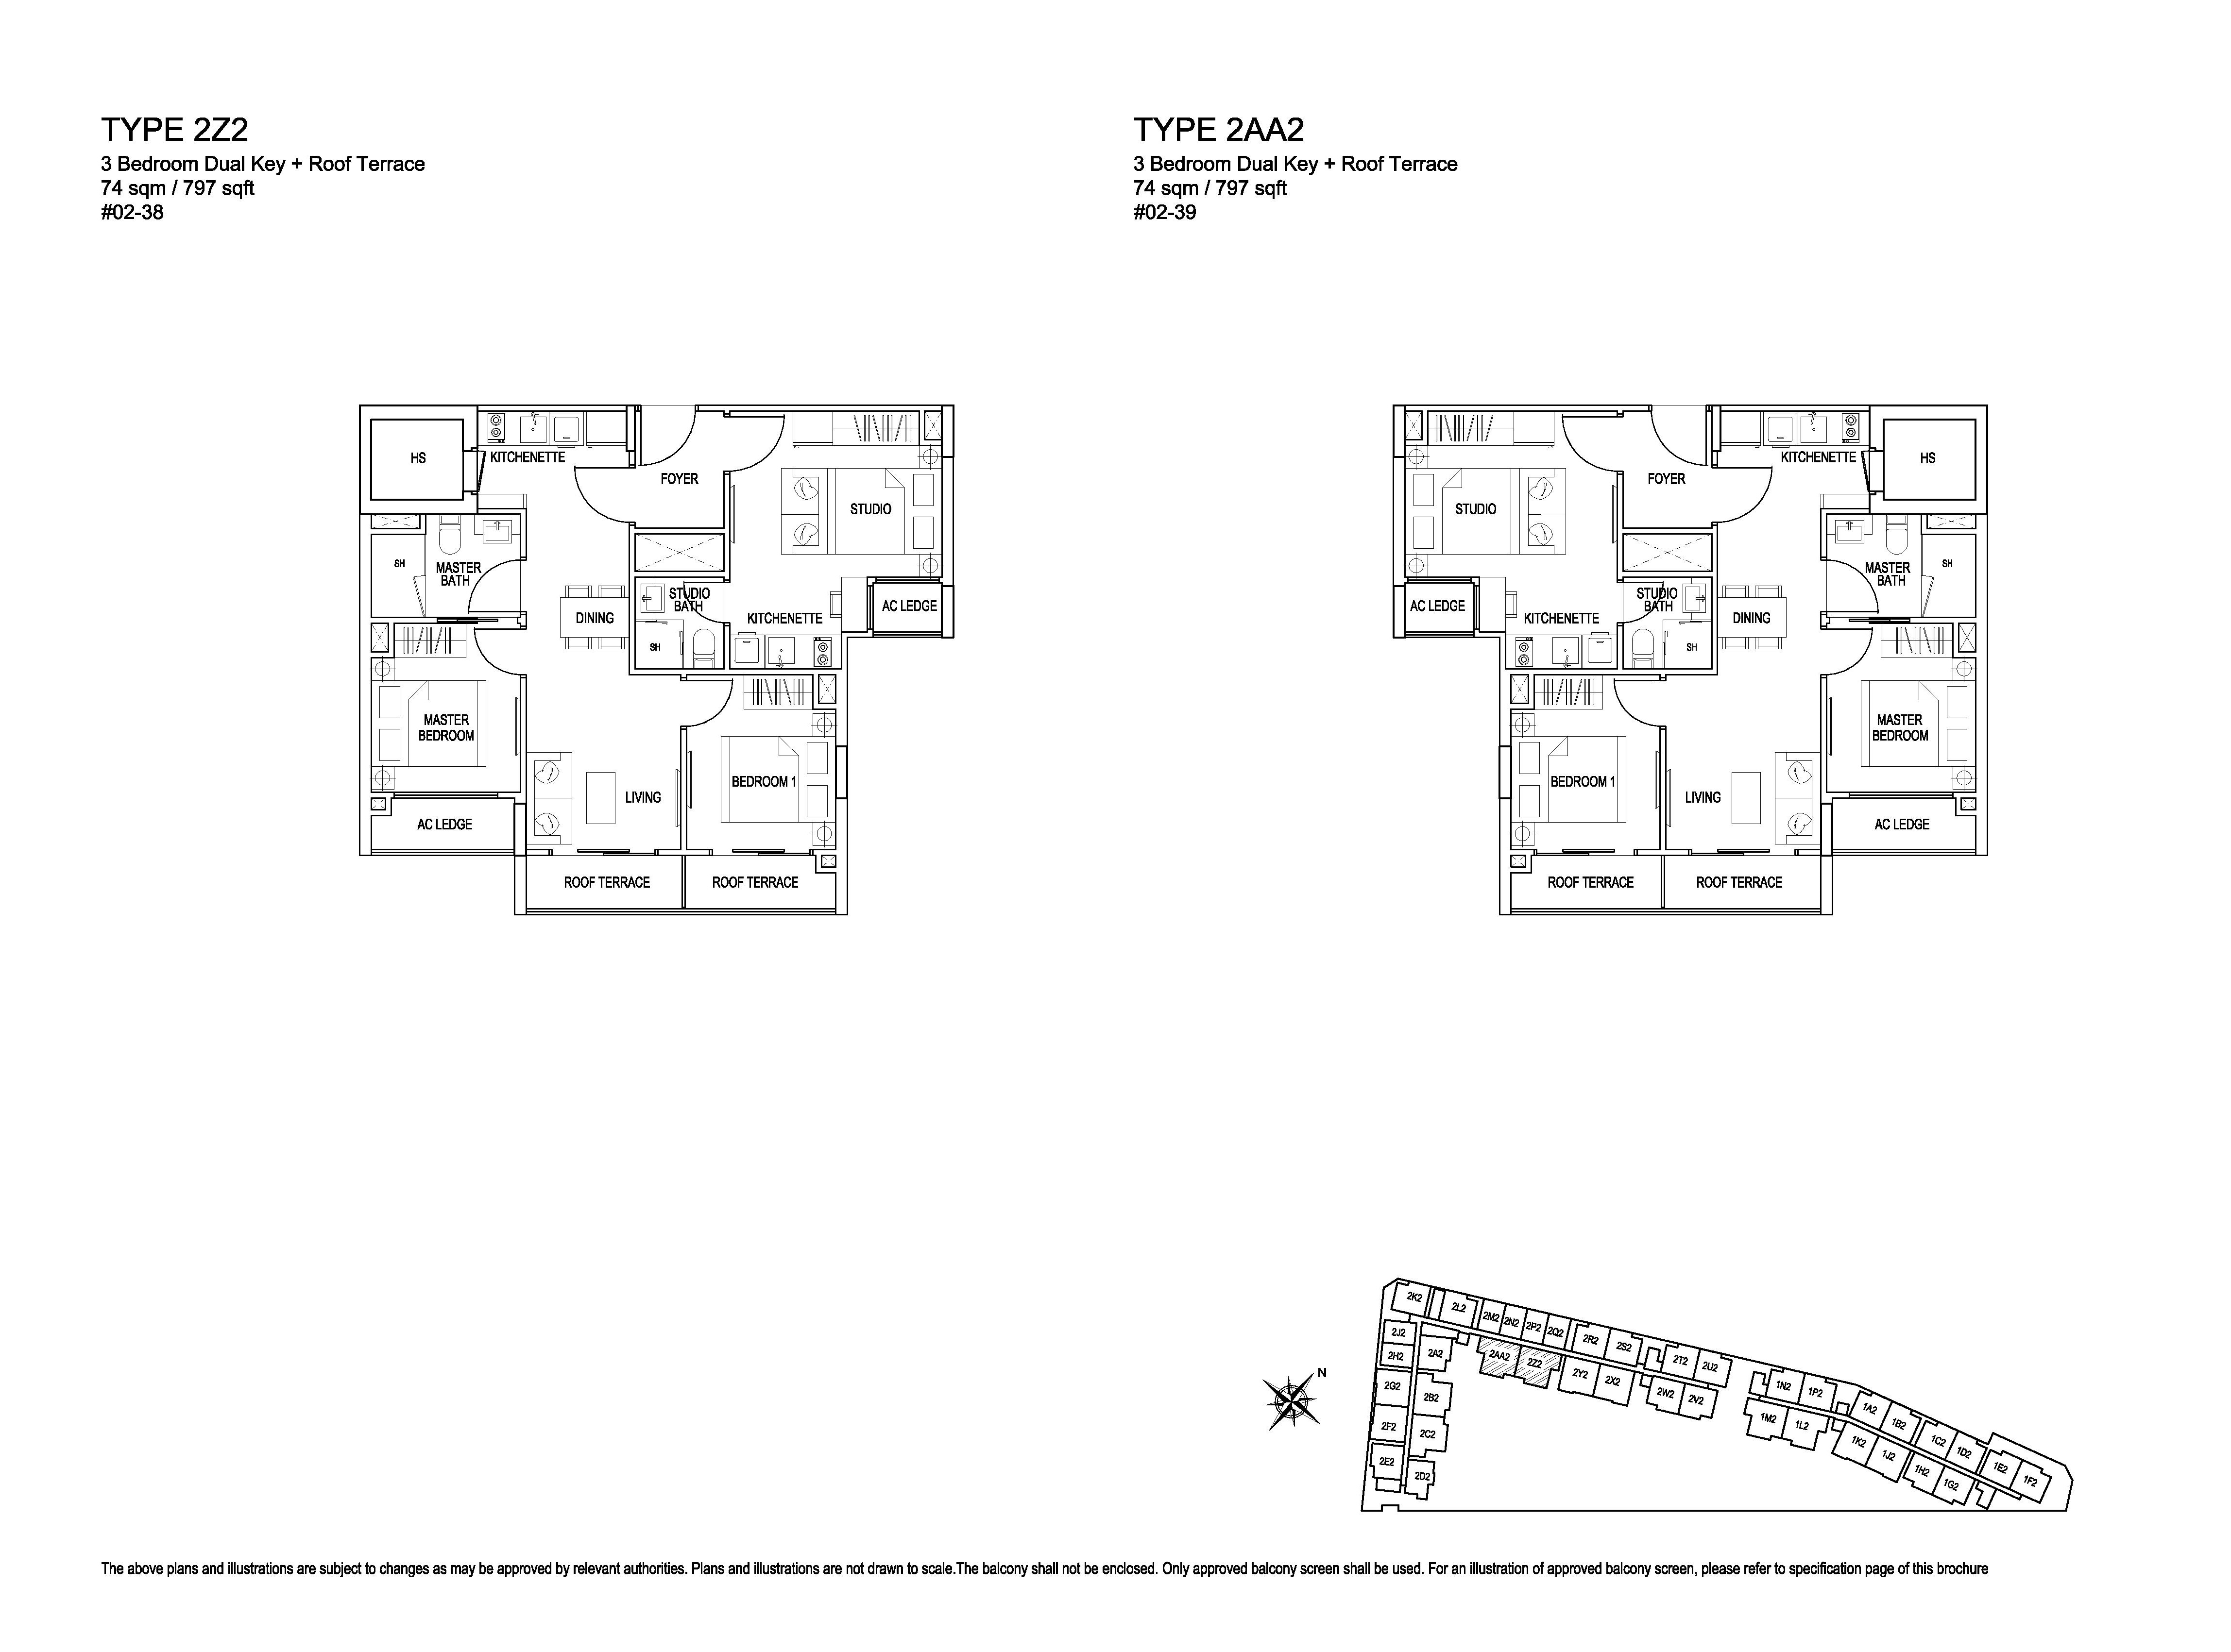 Kensington Square 3 Bedroom Dual Key Floor Plans Type 2Z2, 2AA2